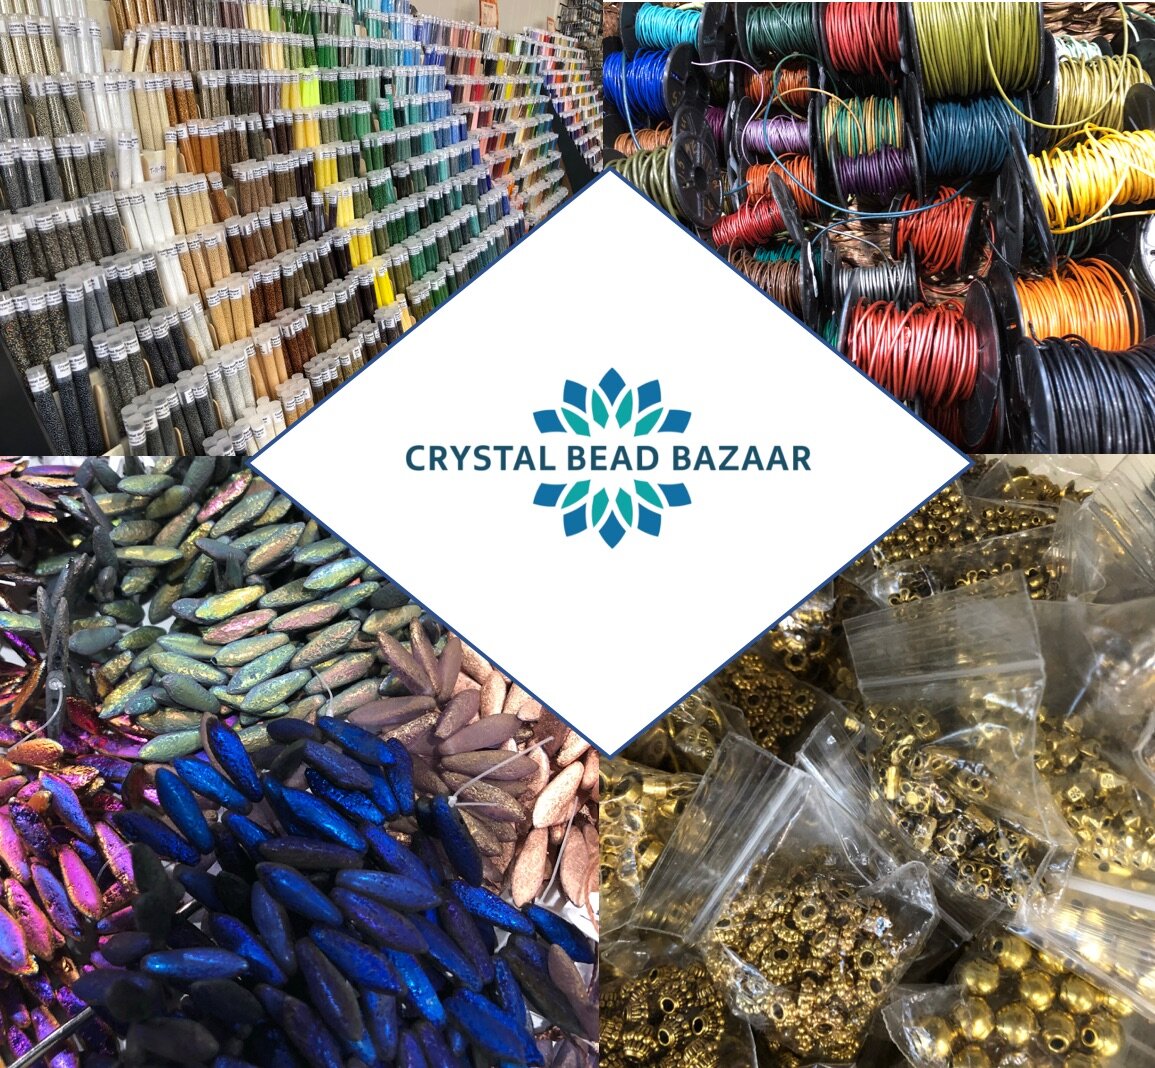 About — Crystal Bead Bazaar